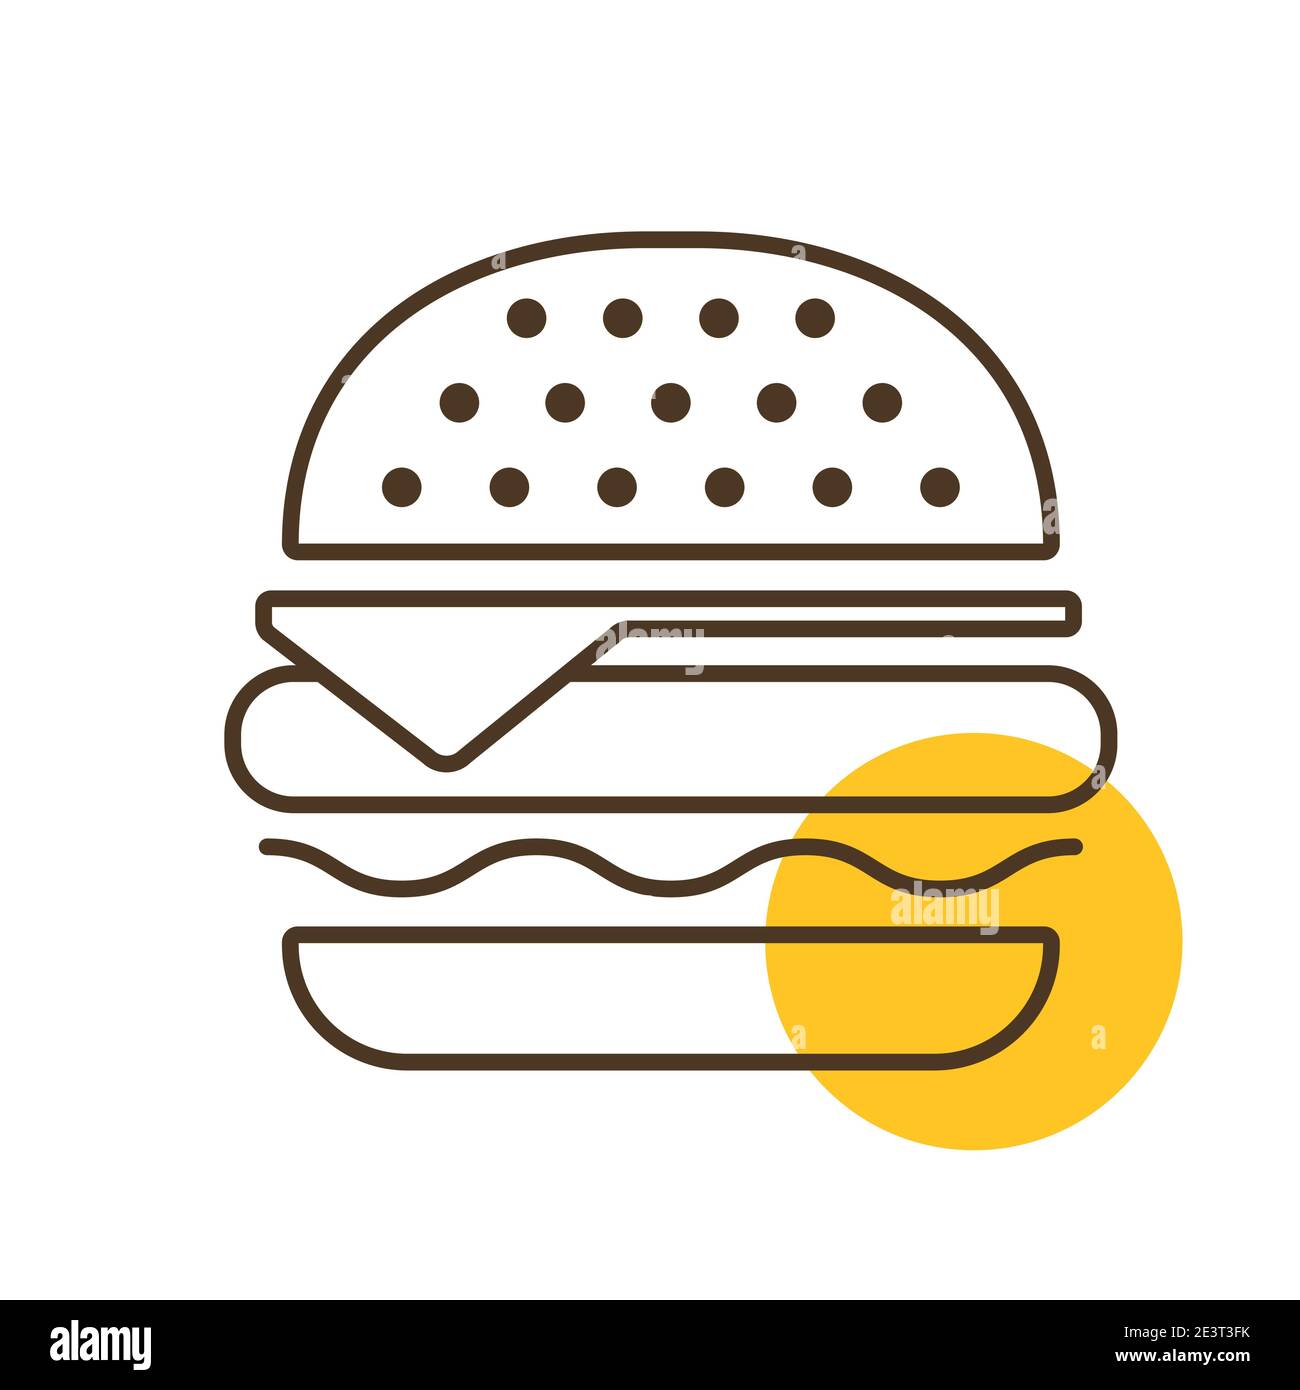 Design PNG E SVG De Ícone De Derrame De Hambúrguer Fast Food Para